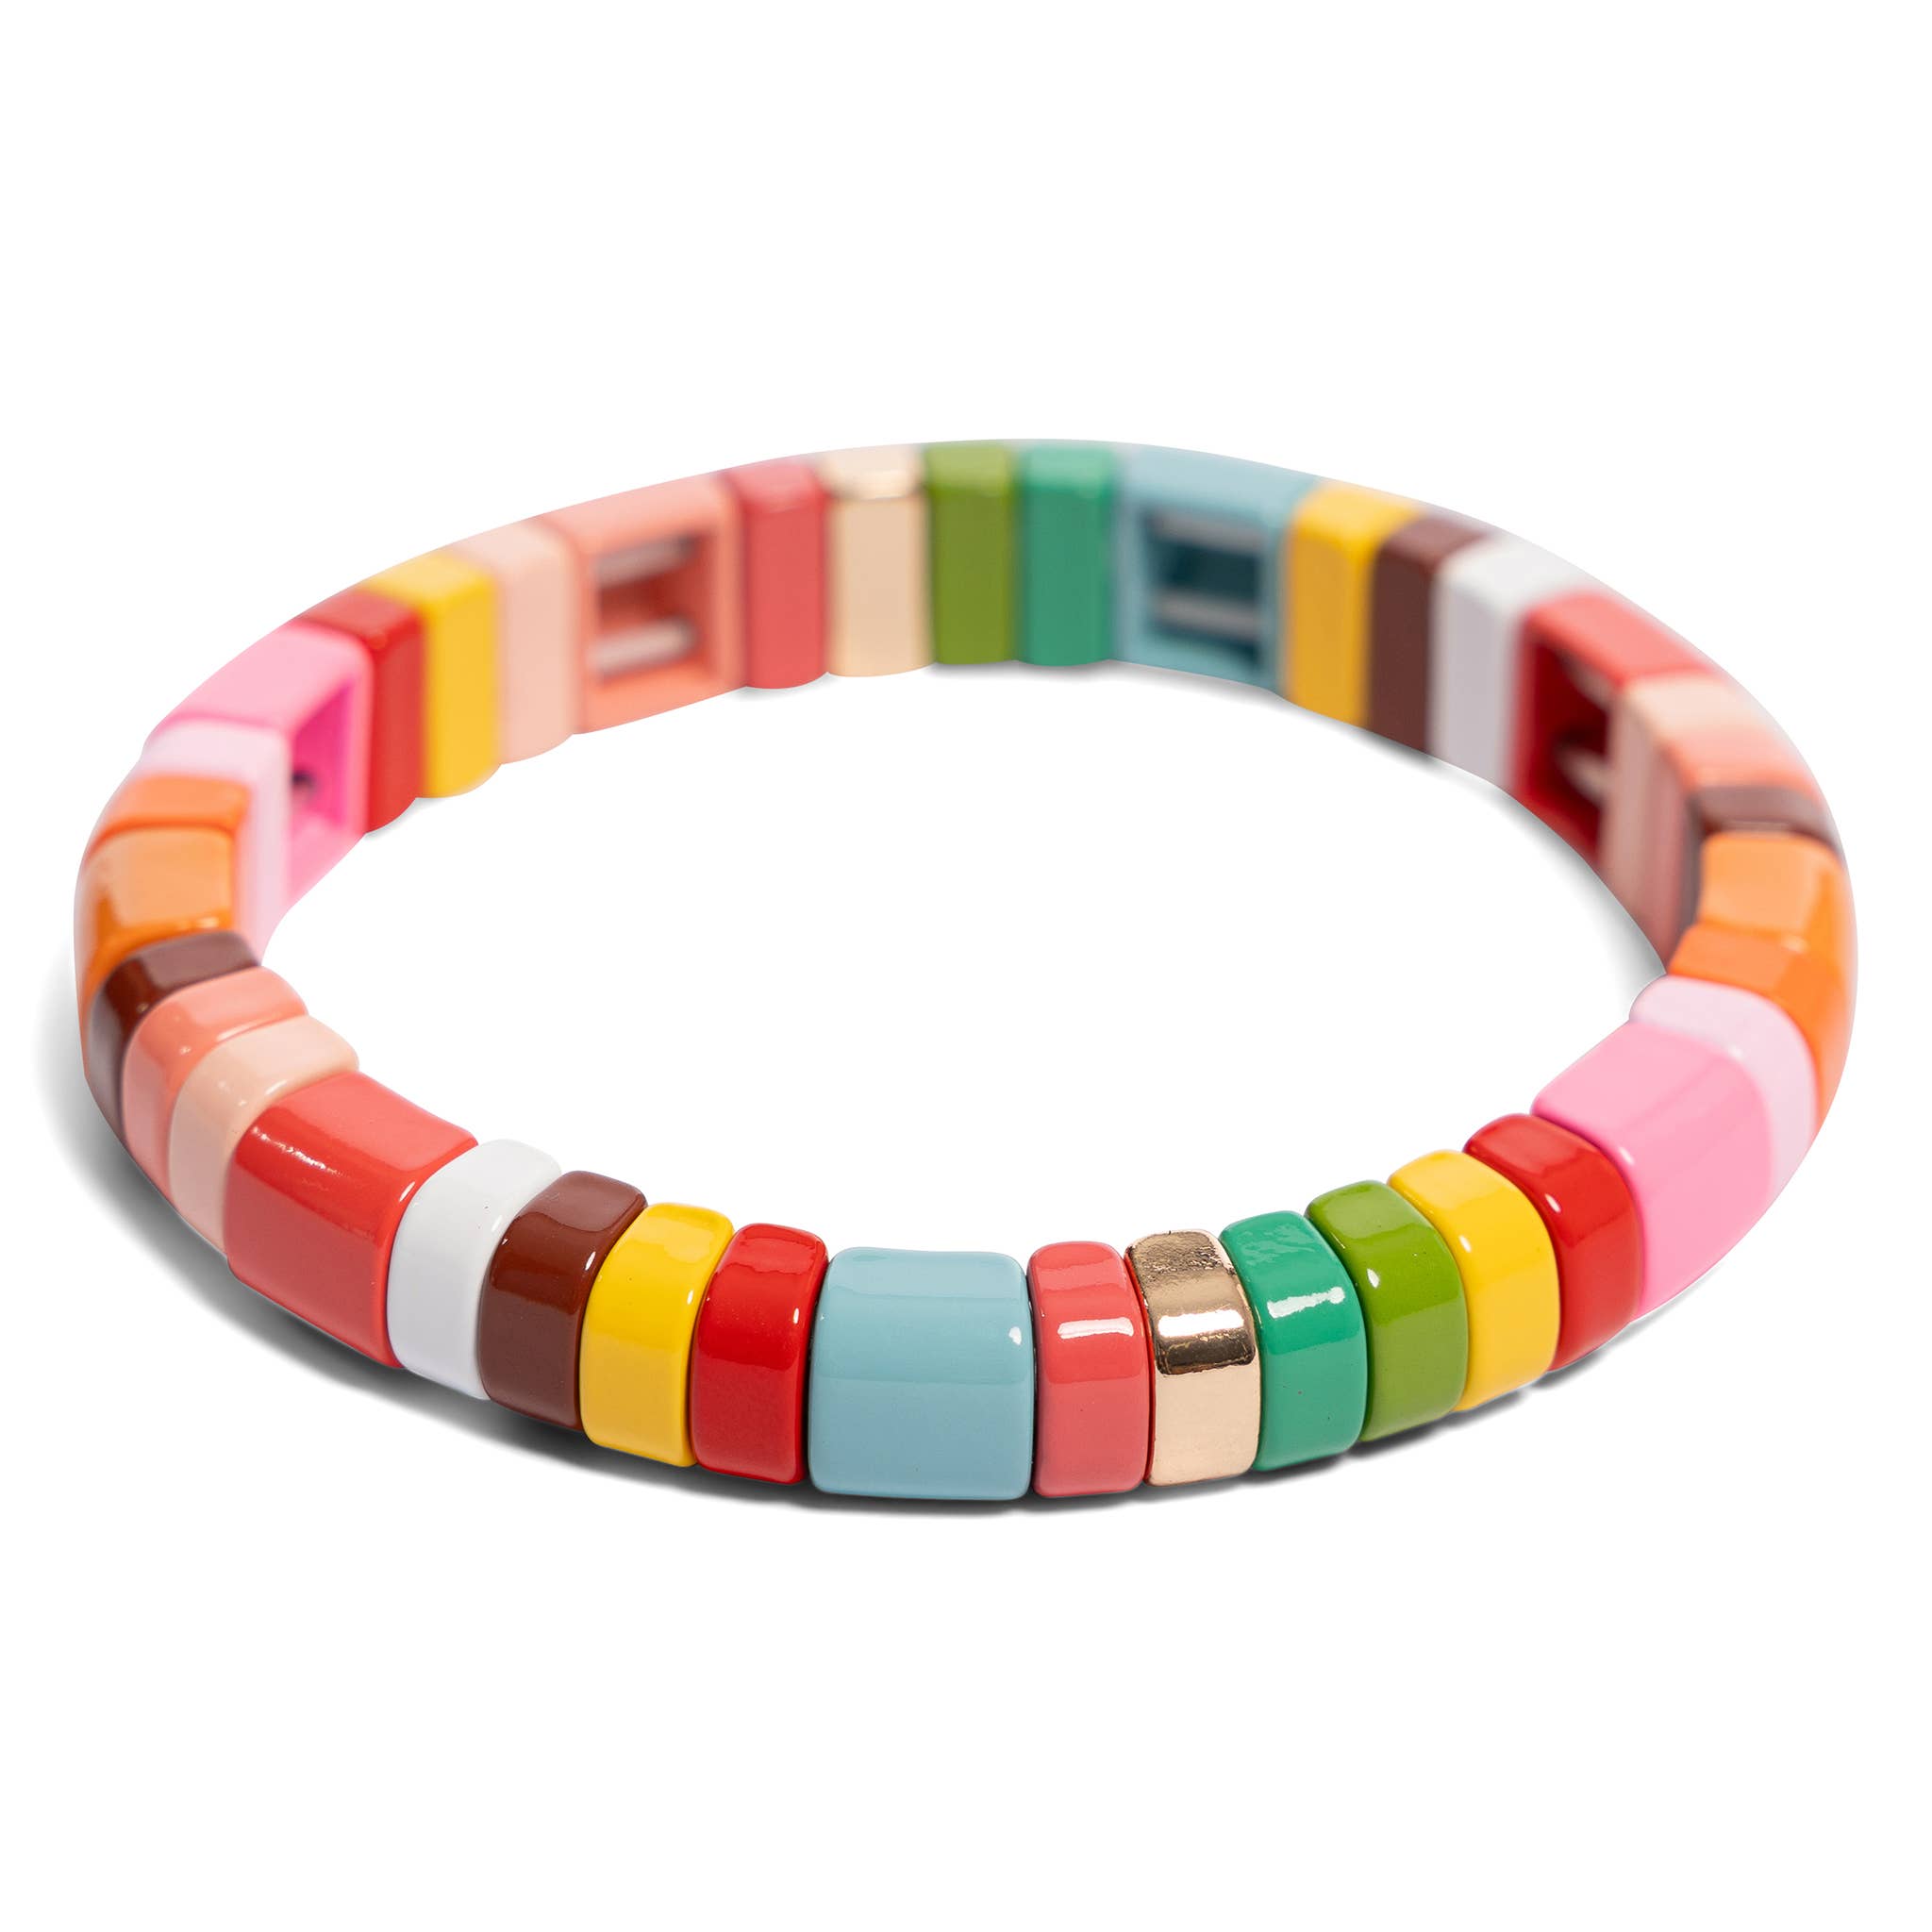 Malibu Sugar Sugar Stripe Tile Bracelet Assortment